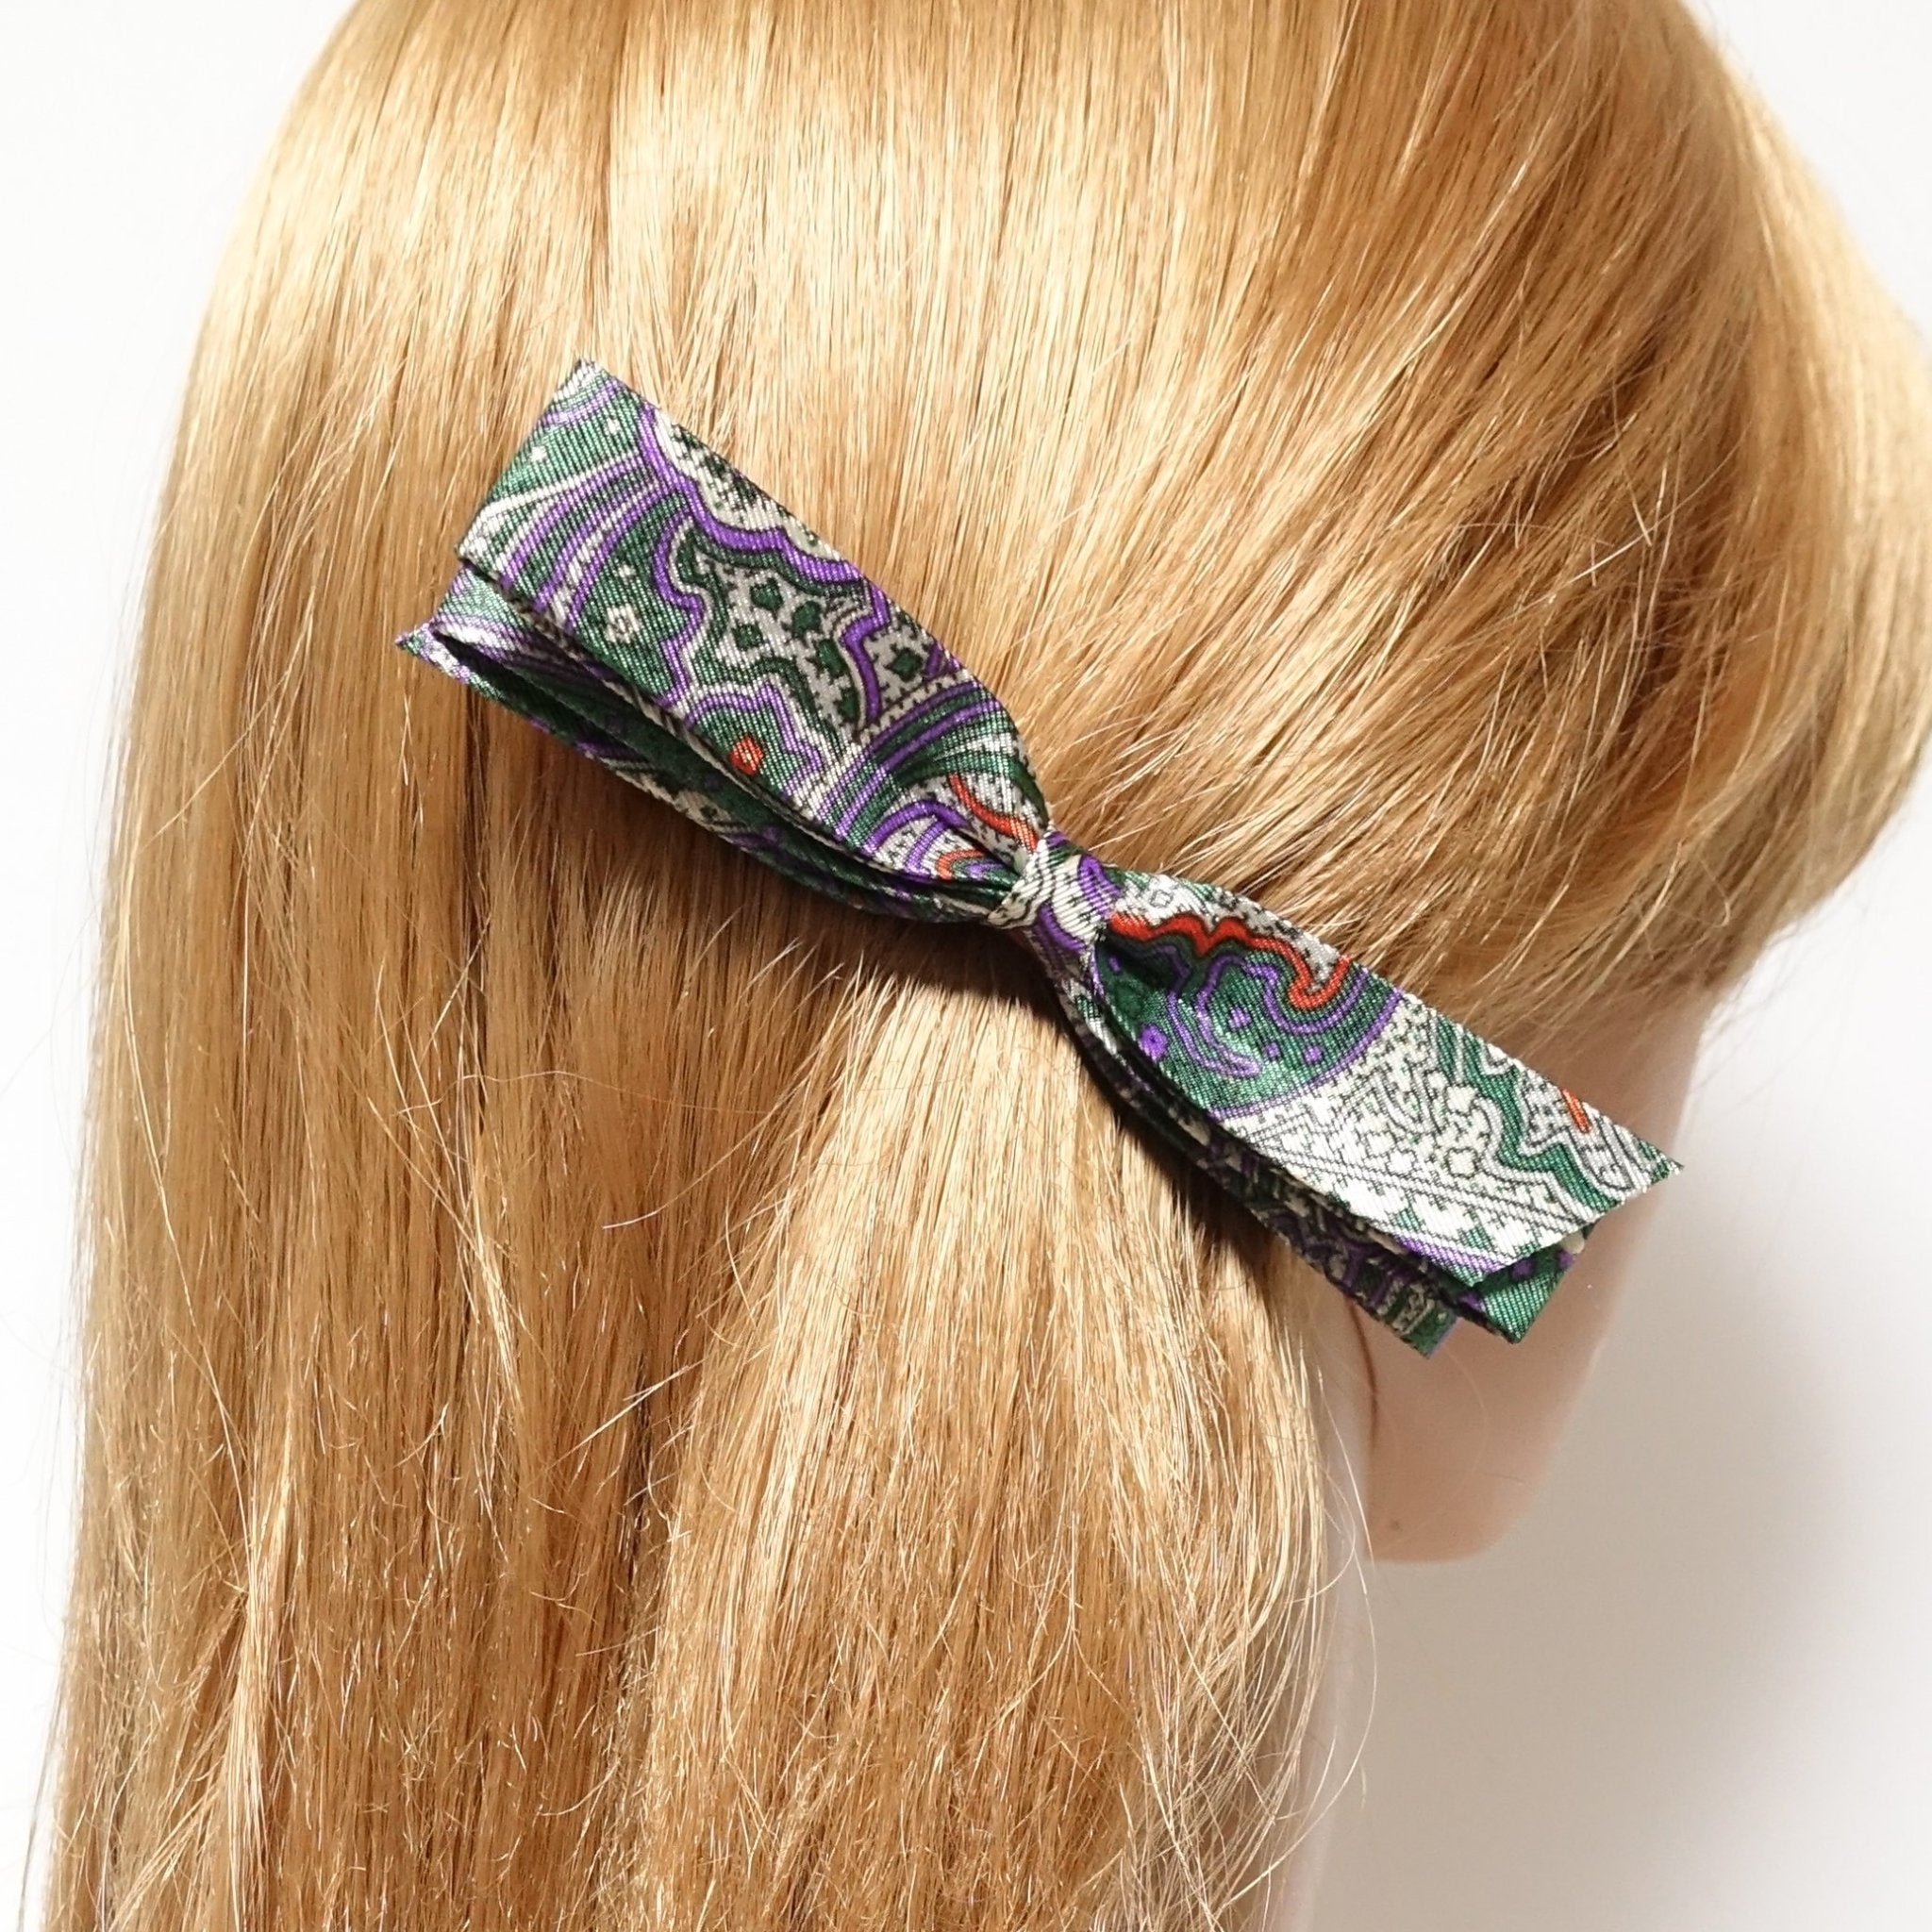 veryshine.com claw/banana/barrette narrow satin hair bow paisley print bow french barrette women hair accessory